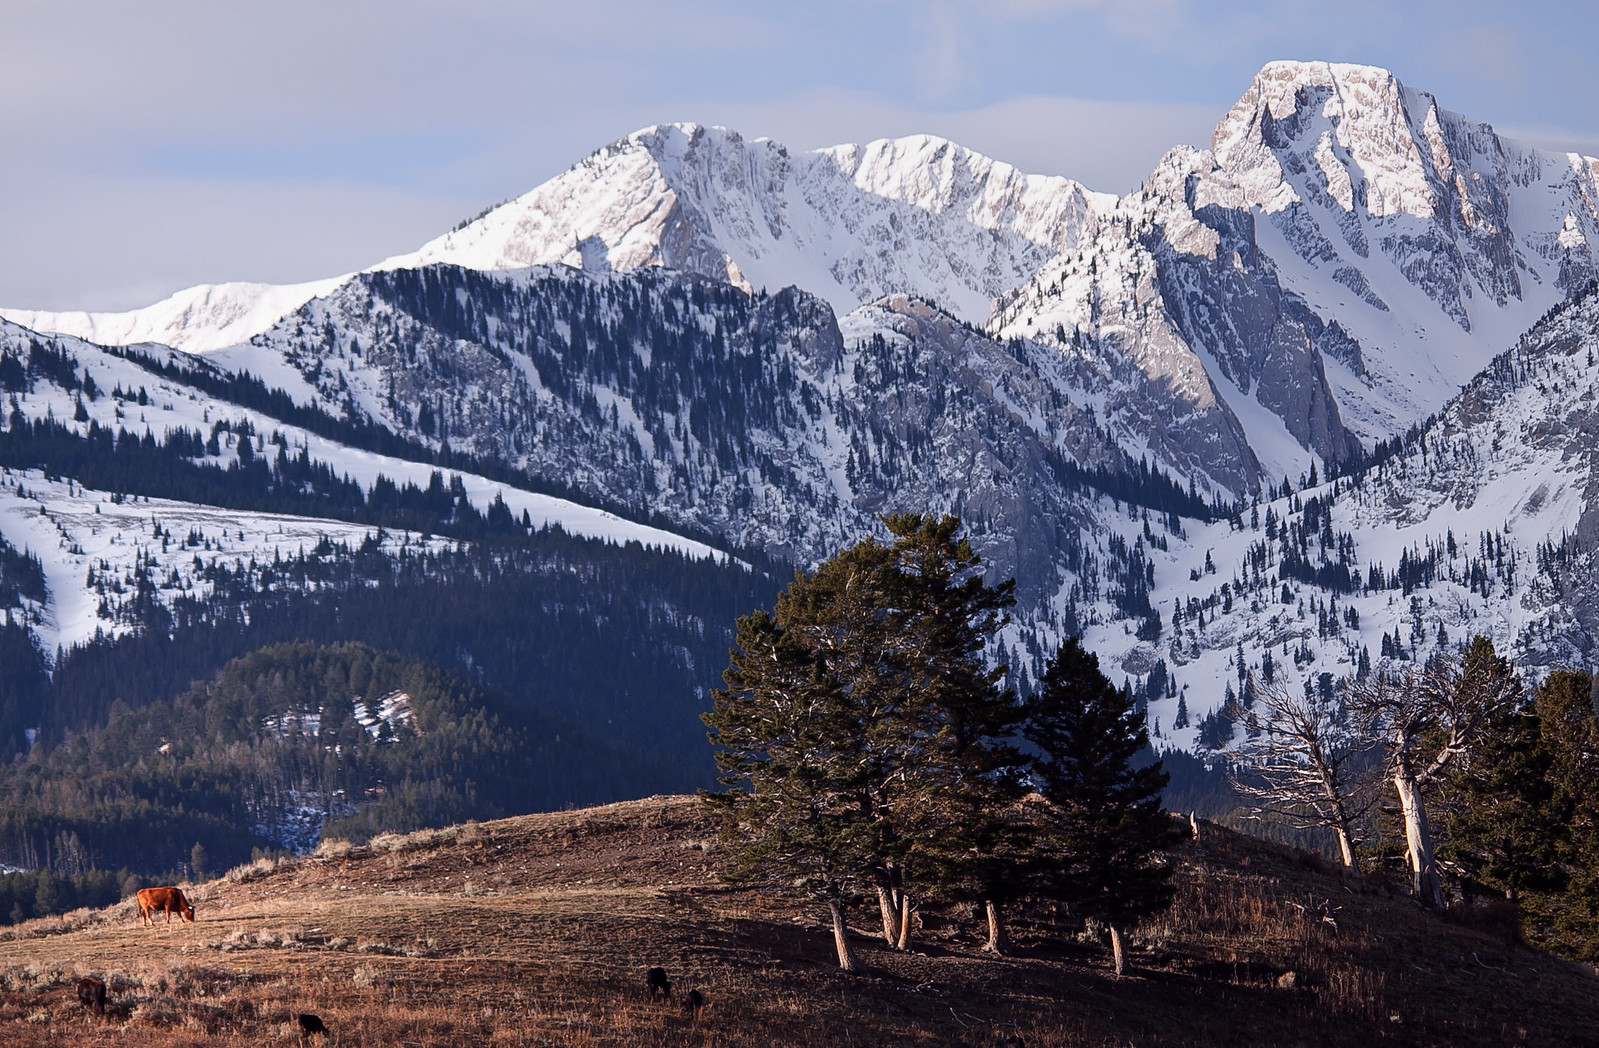 Montana is beautiful. : pics